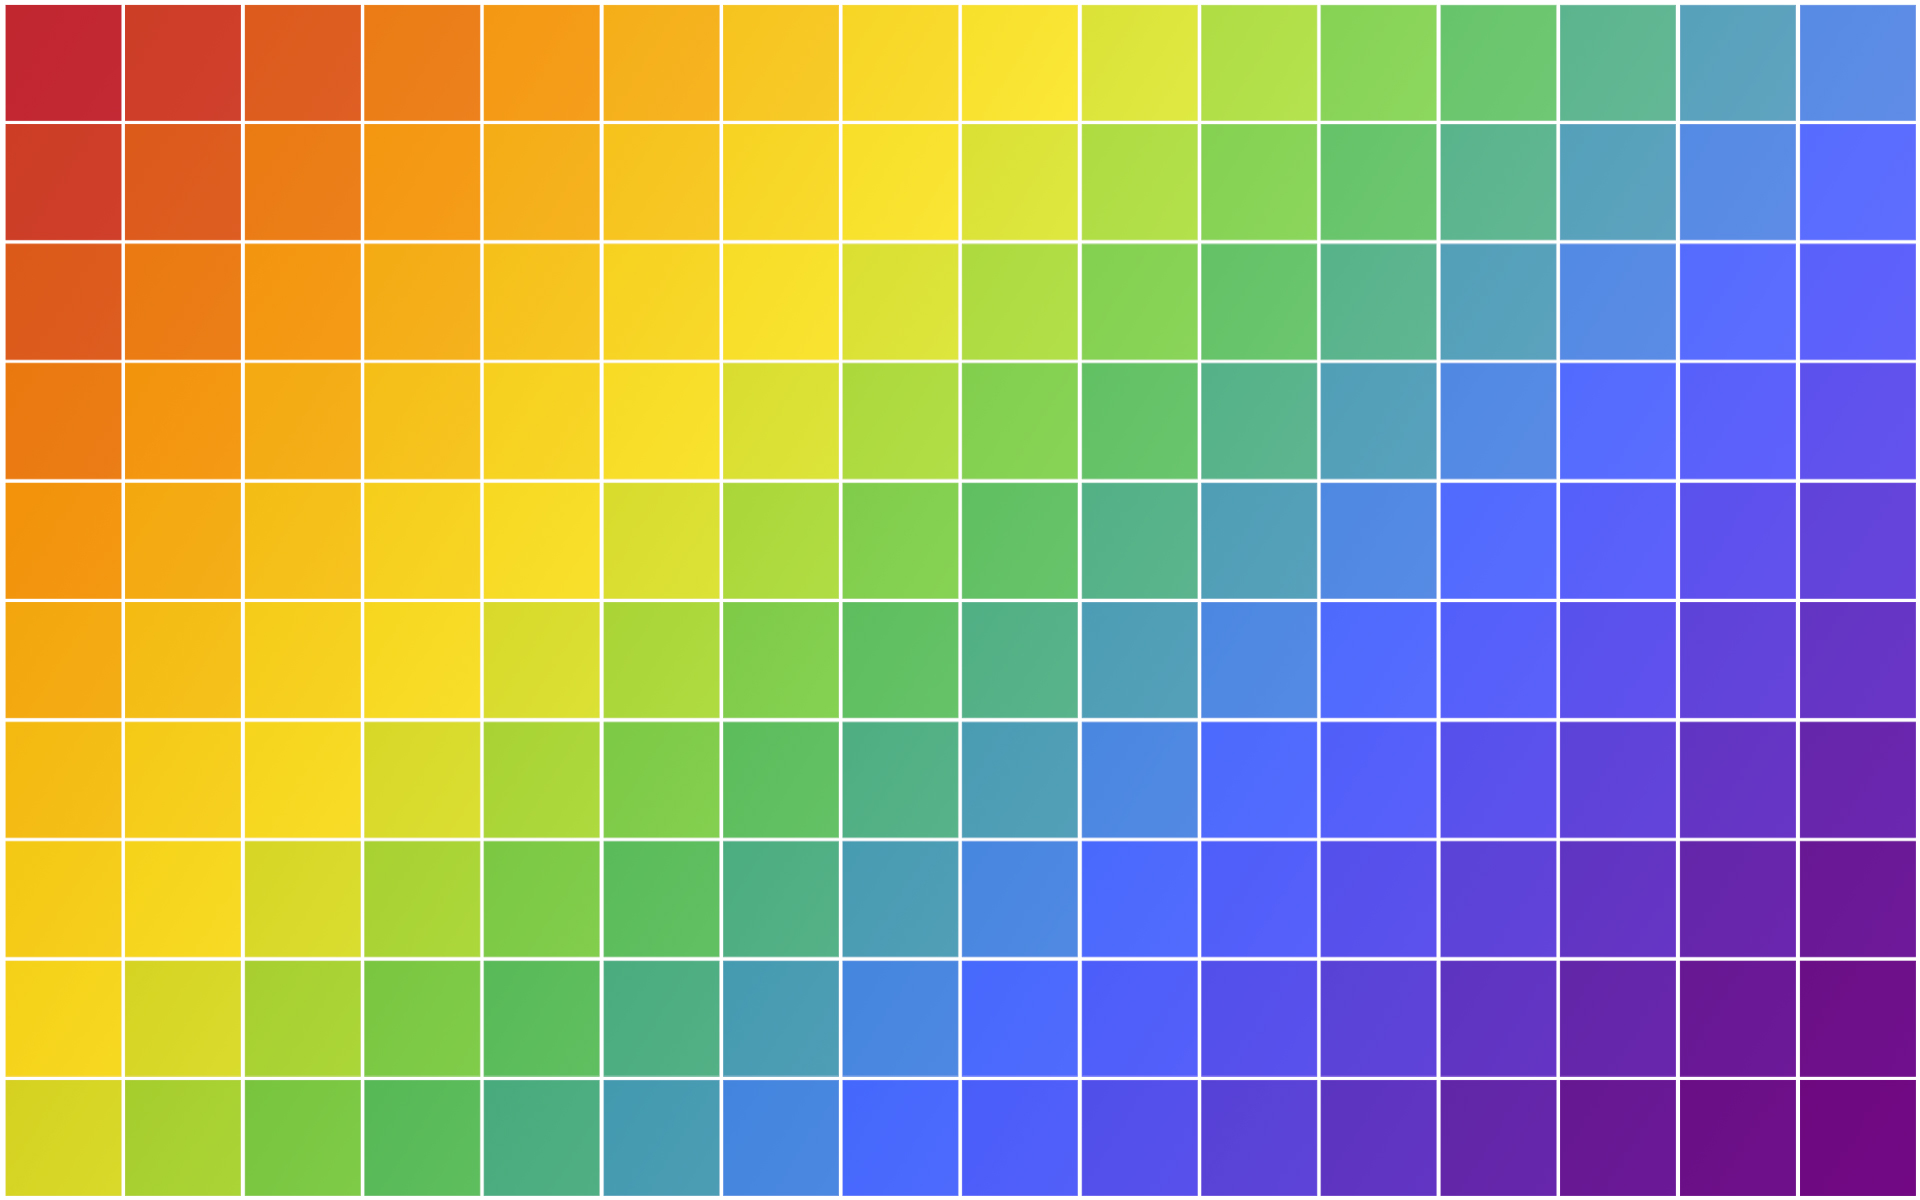 Cool Rainbow Wallpaper 45361 1920x1200 px